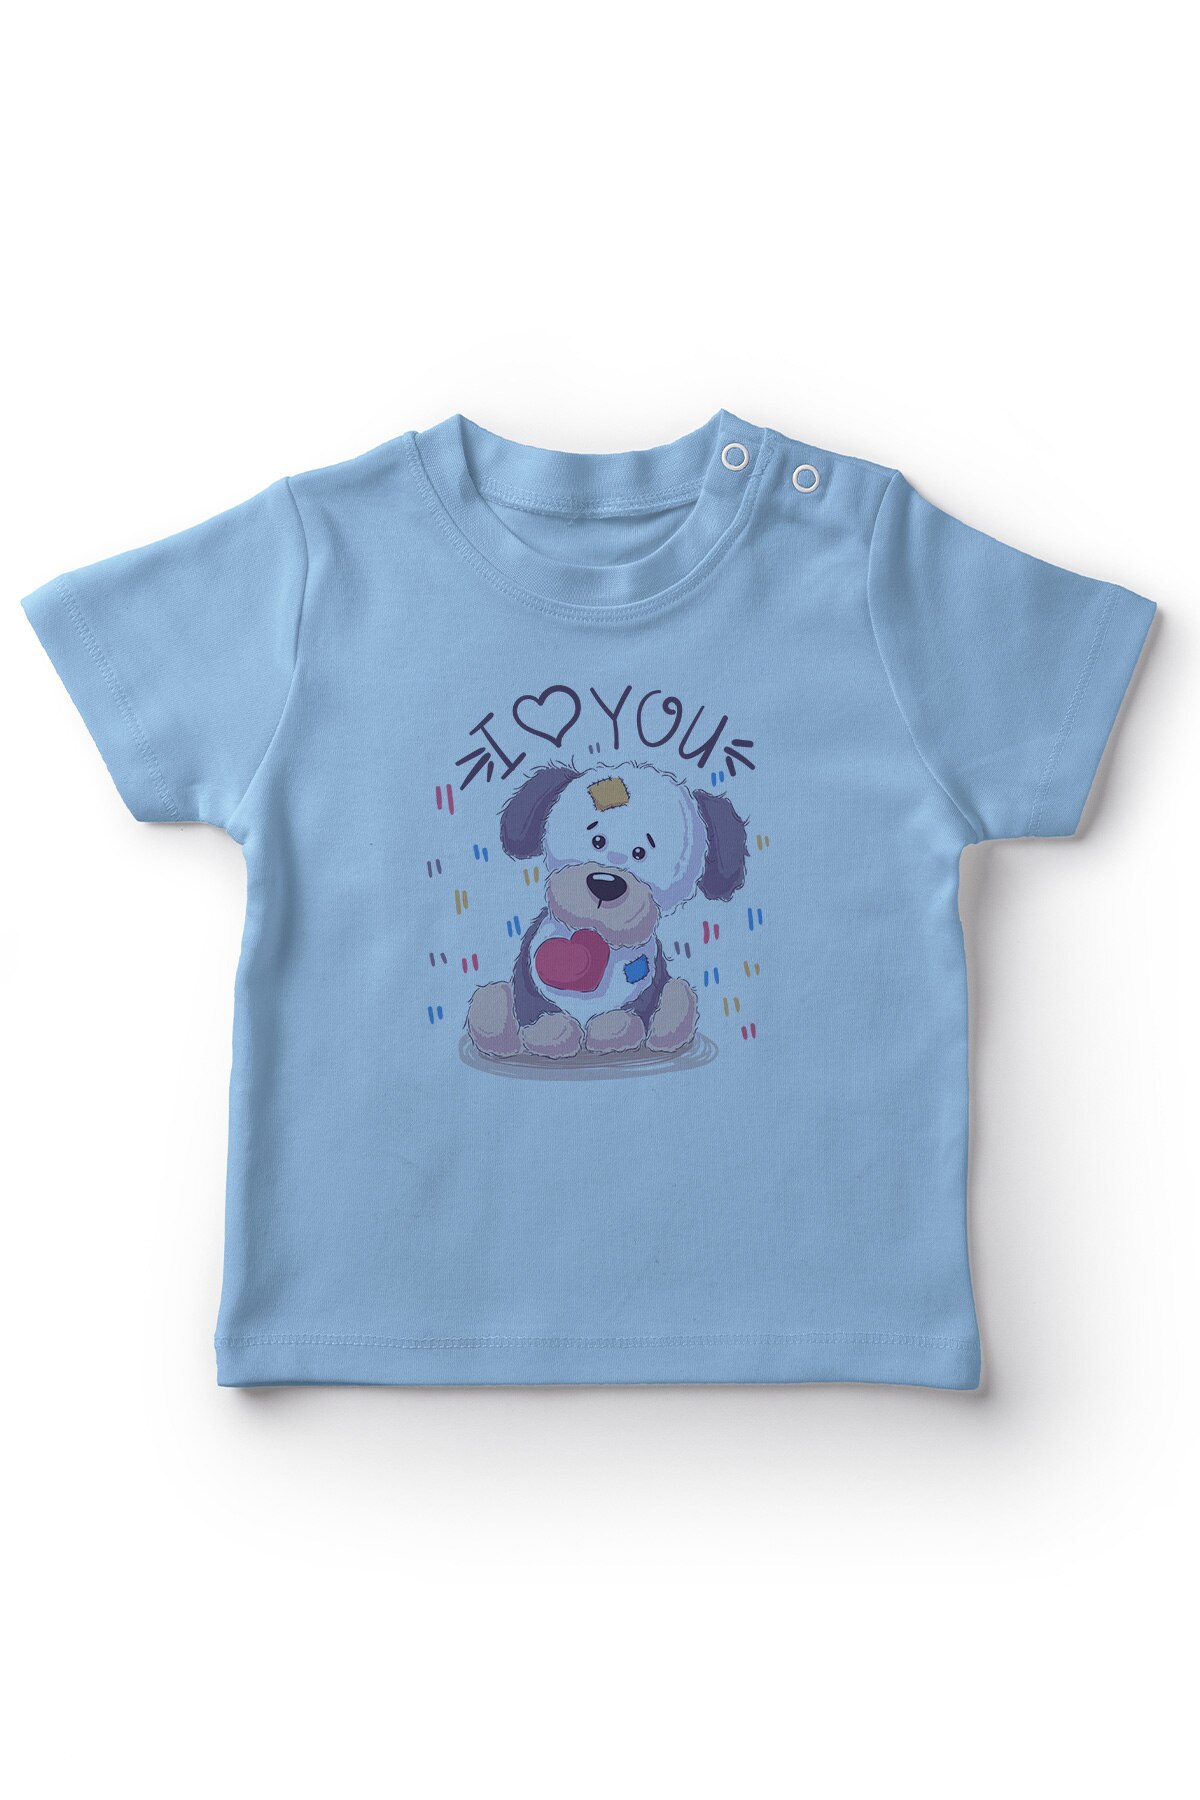 Angemiel Baby I Love You Gedrukt Hond Baby Boy T-shirt Blauw